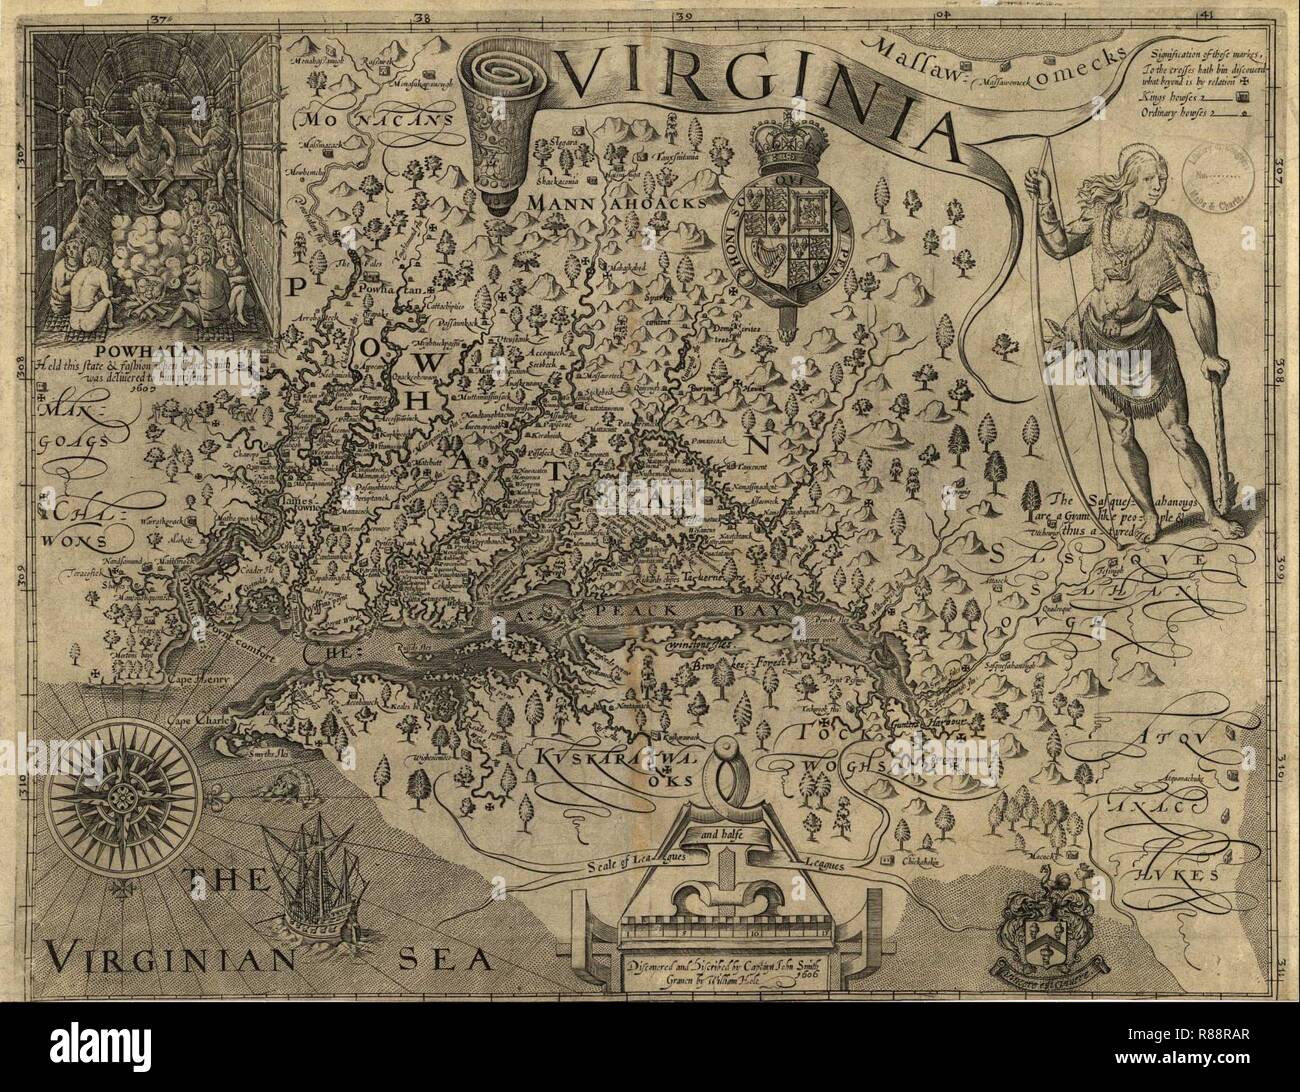 Capt John Smith's map of Virginia 1624. Stock Photo